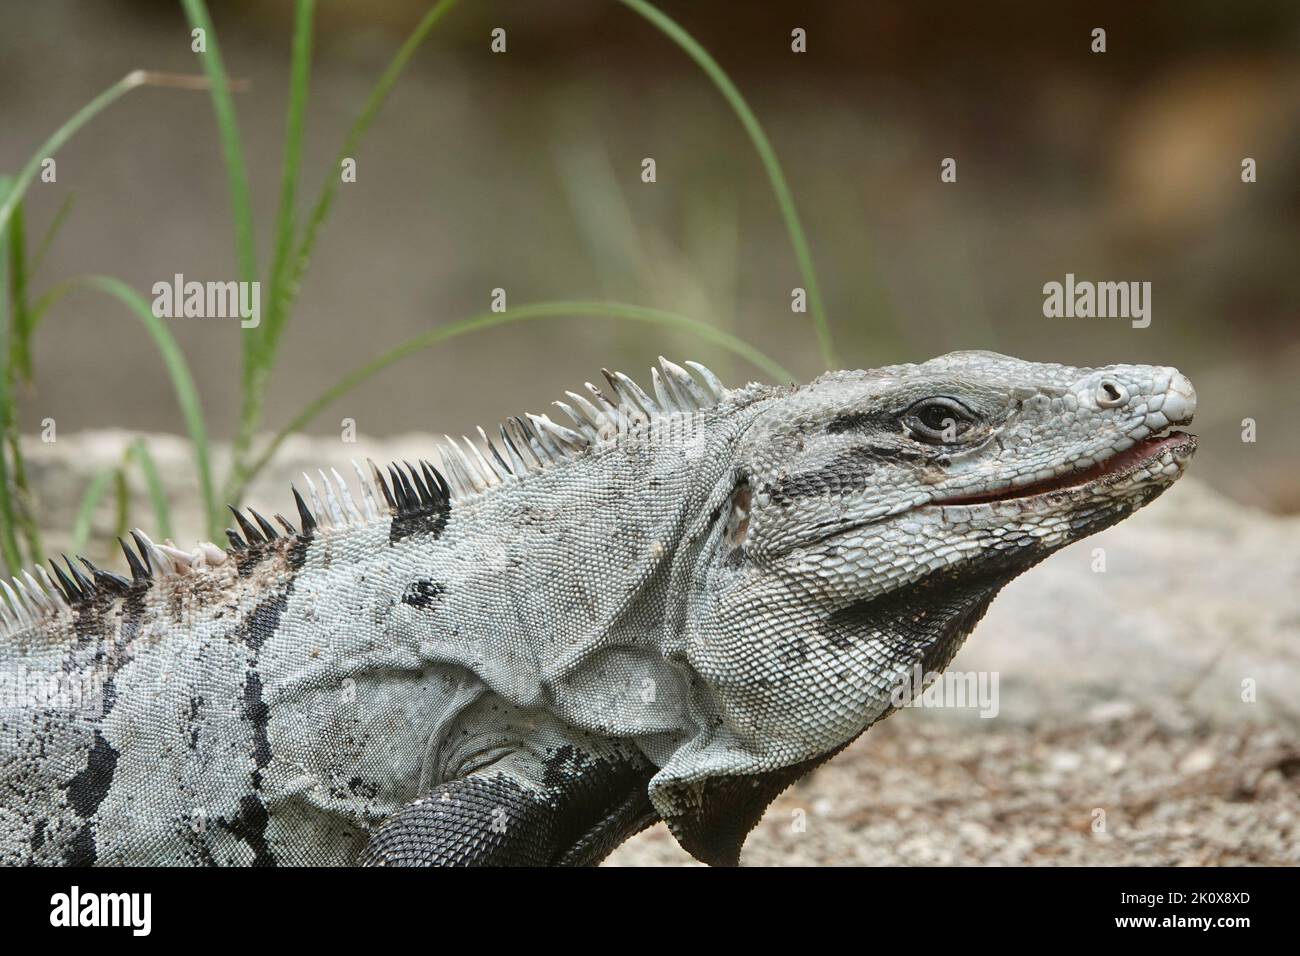 A closeup shot of Spiny-Tailed Iguana - Ctenosaura similis - on gray background with grass Stock Photo